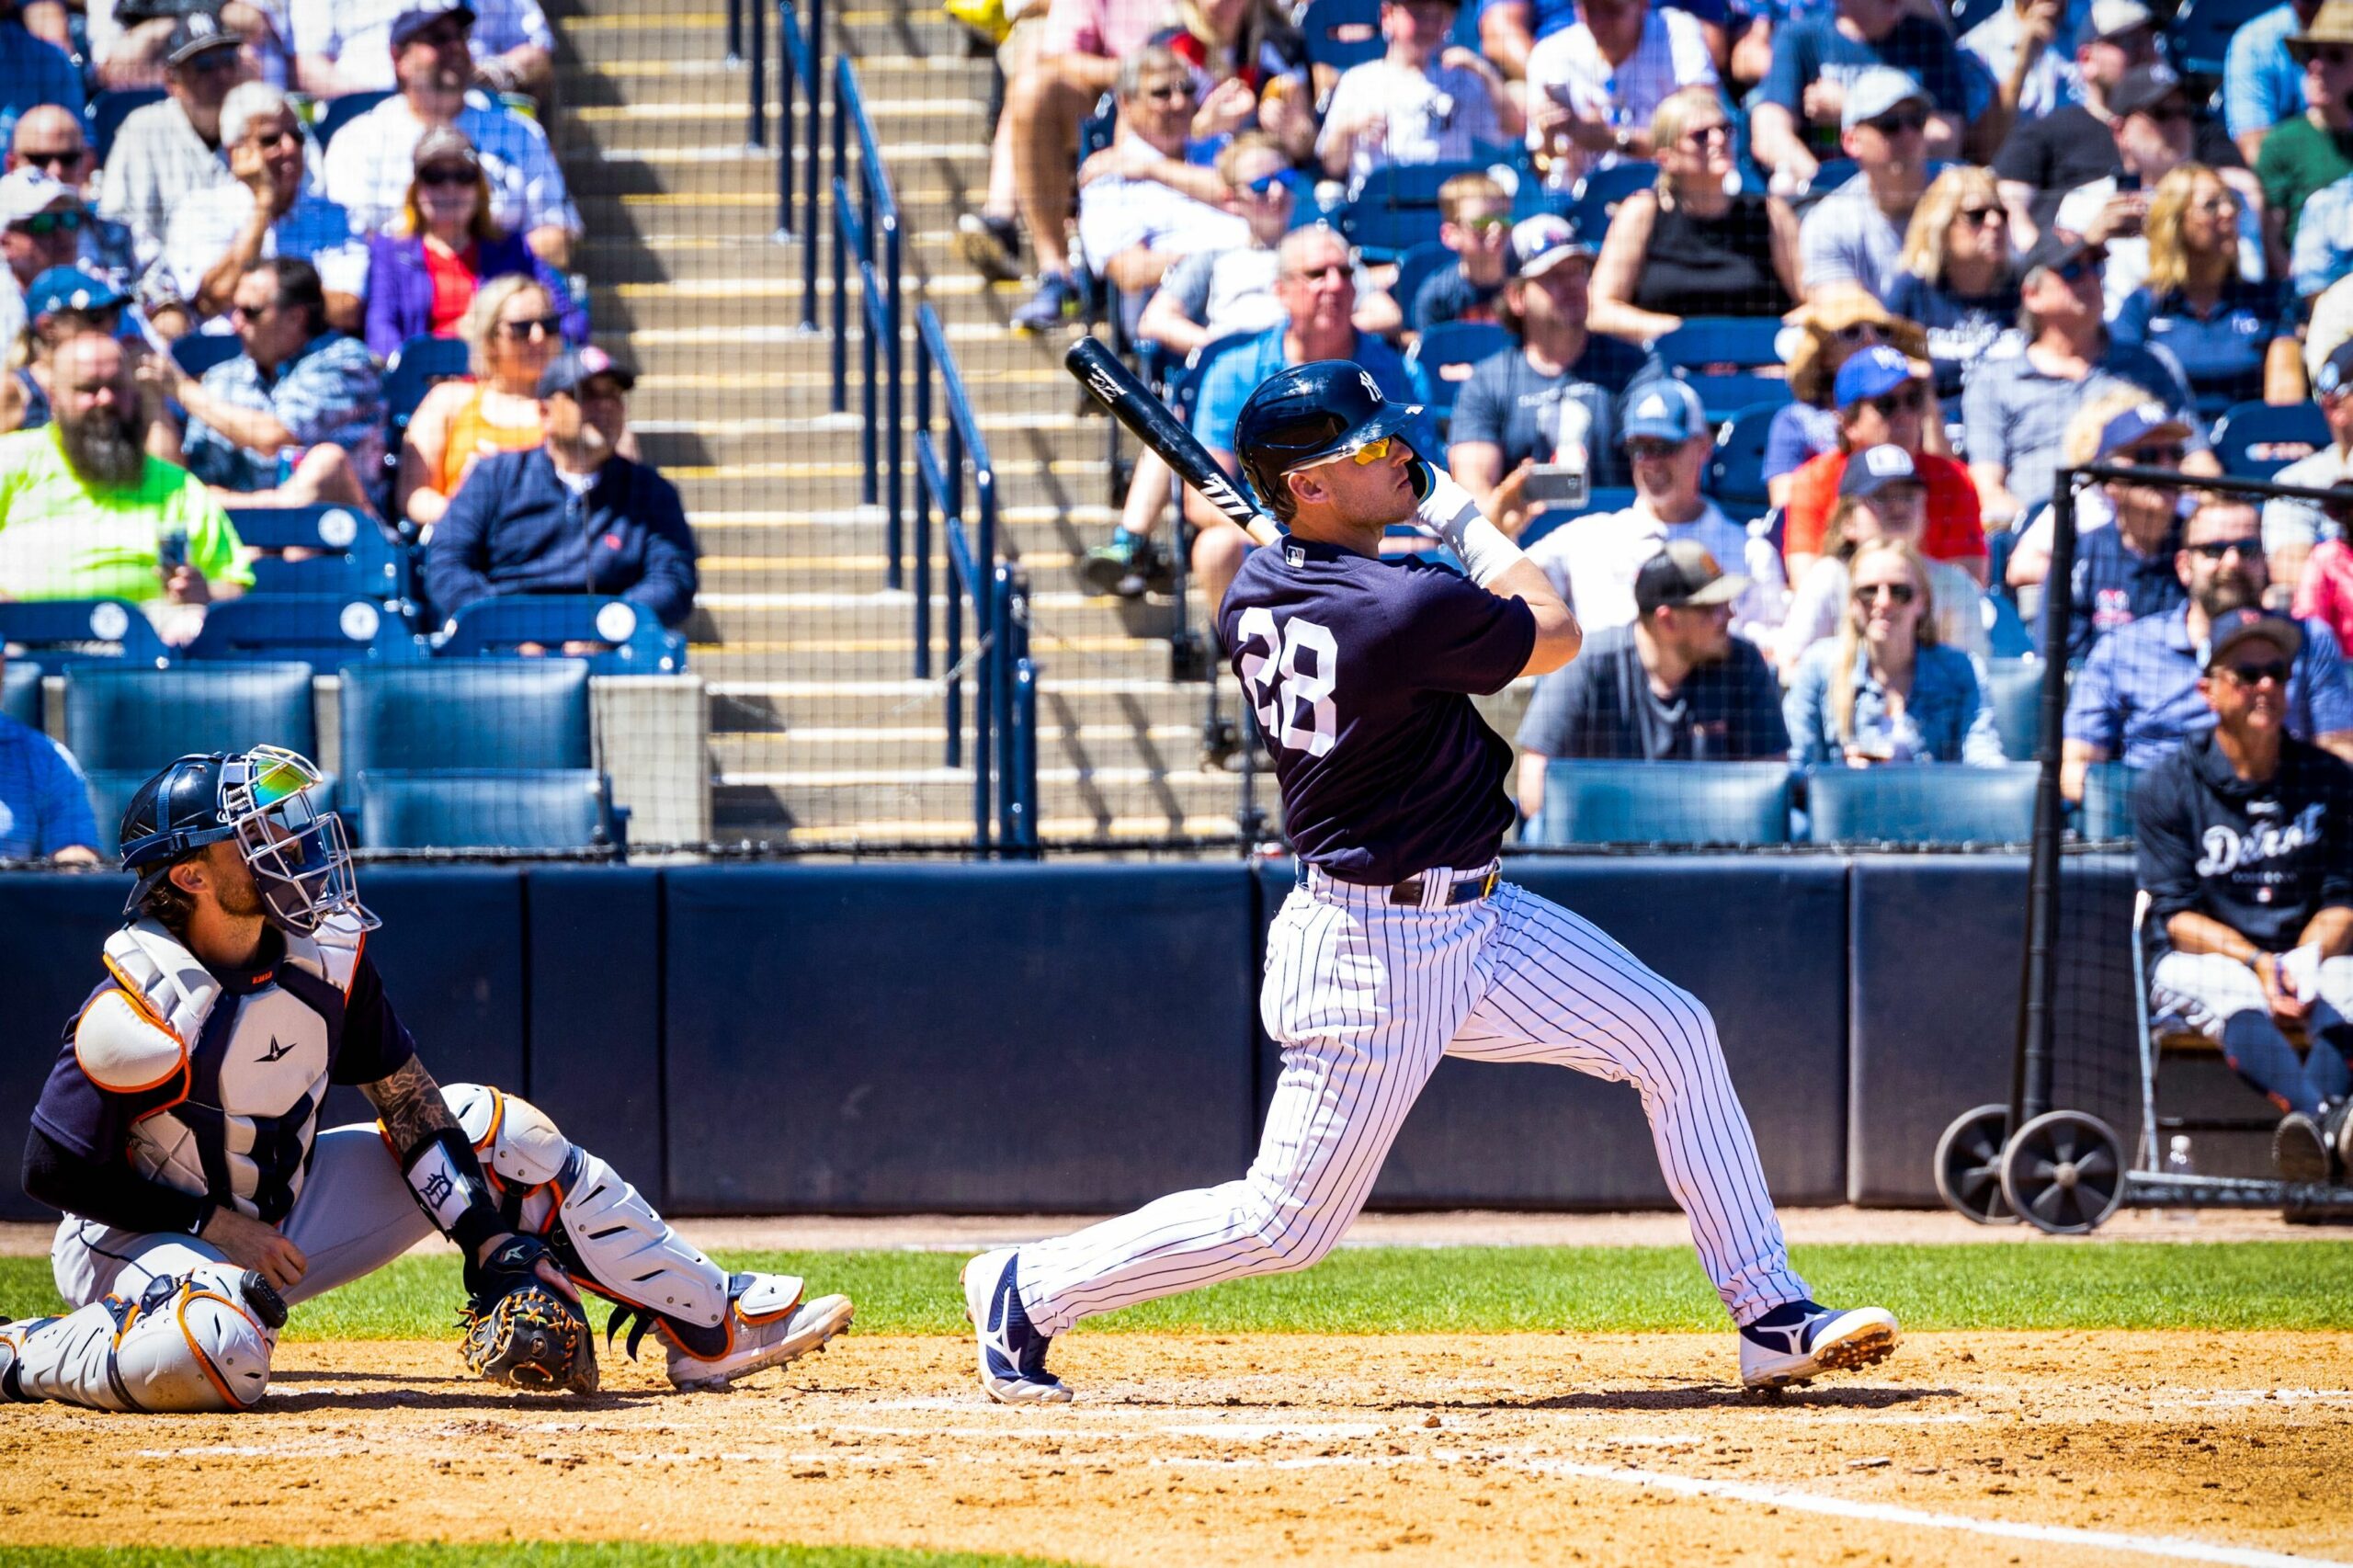 Josh Donaldson hitting a home run. Photo courtesy of New York Yankees.